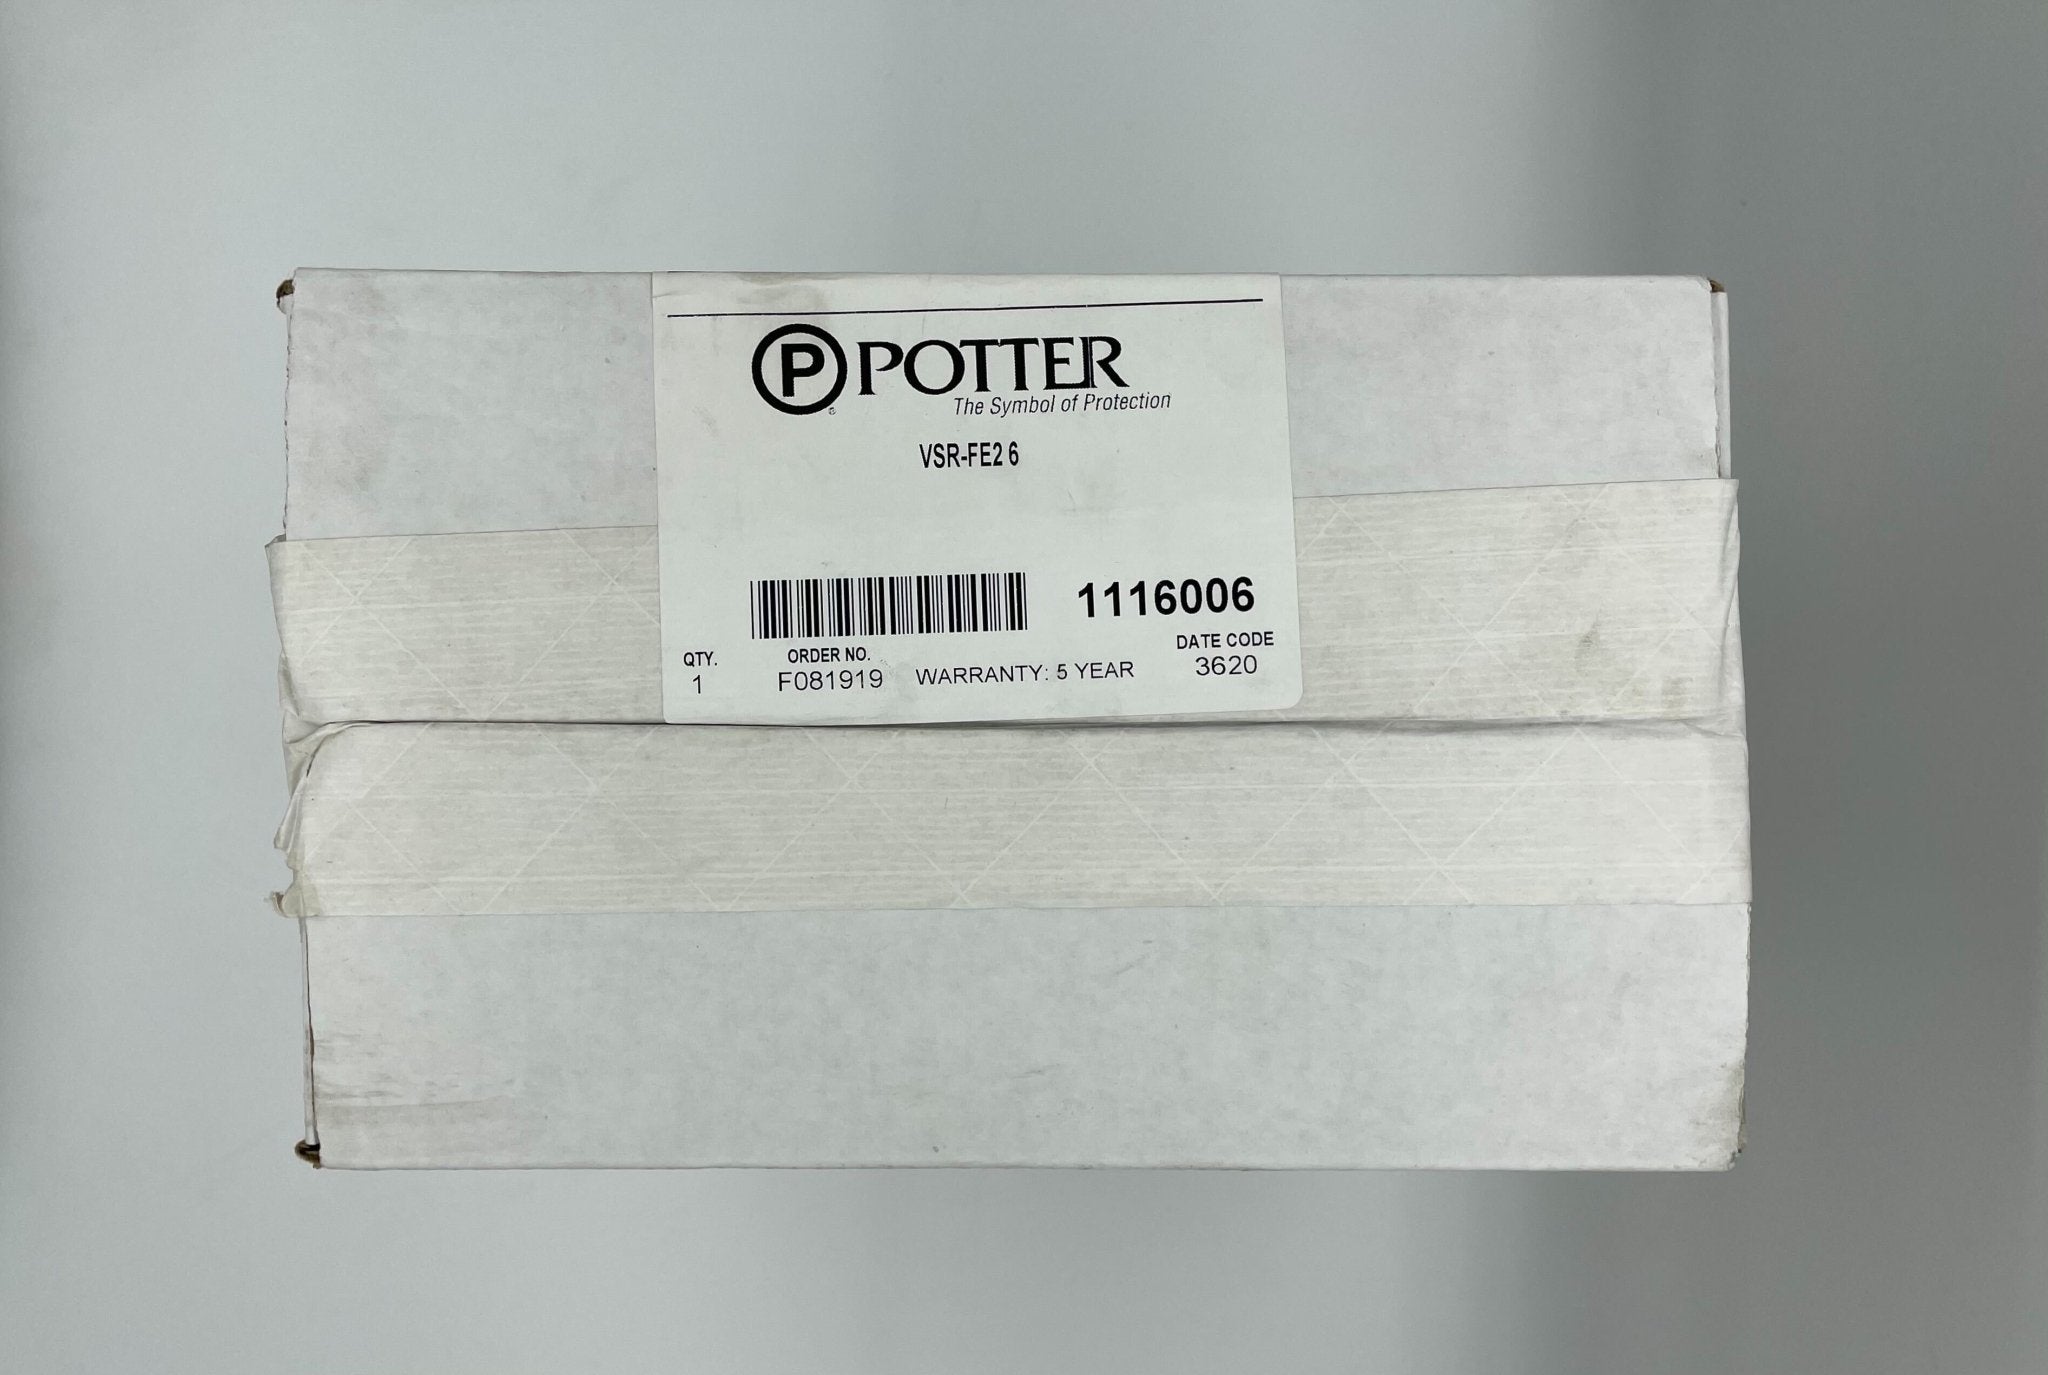 Potter VSR-FE2-6 - The Fire Alarm Supplier